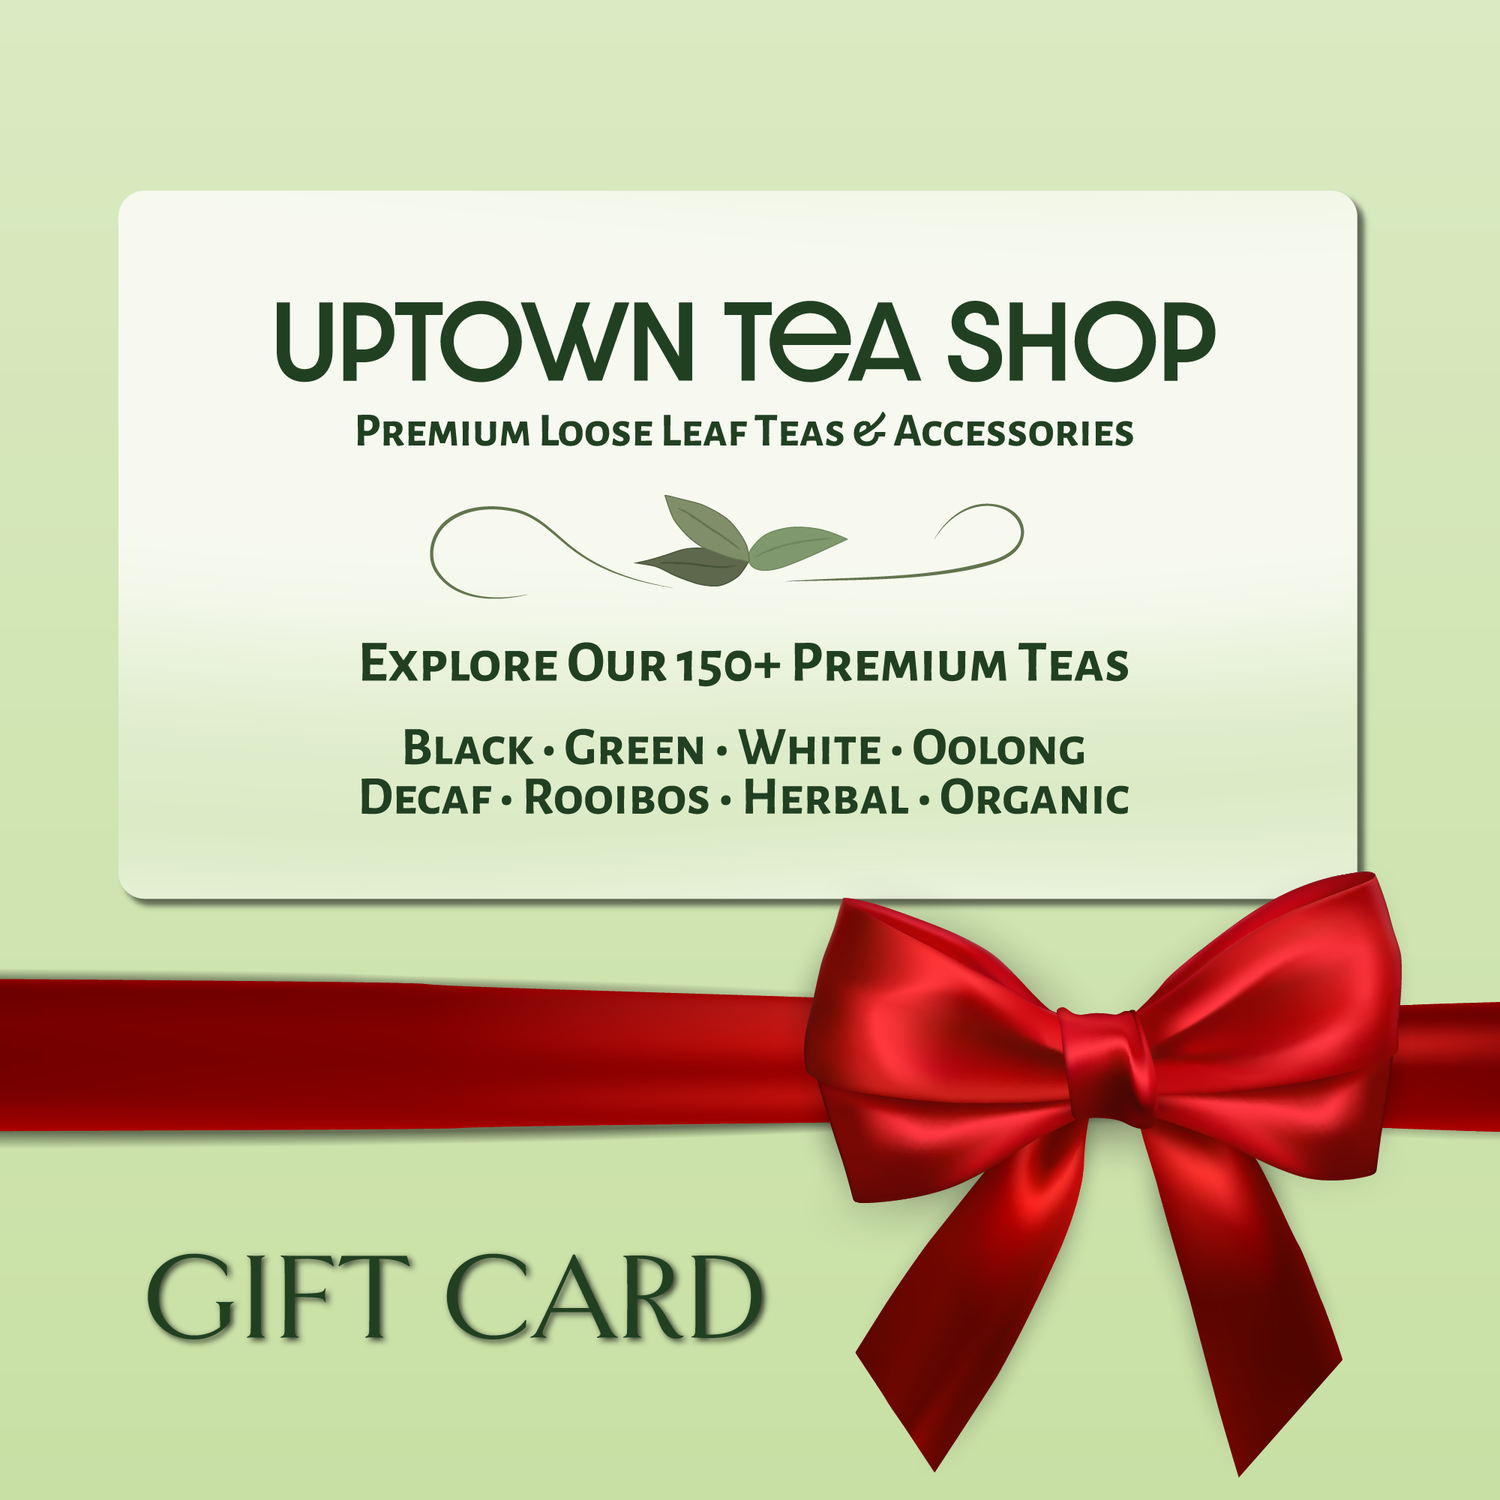 Uptown Tea Shop Gift Card -$40